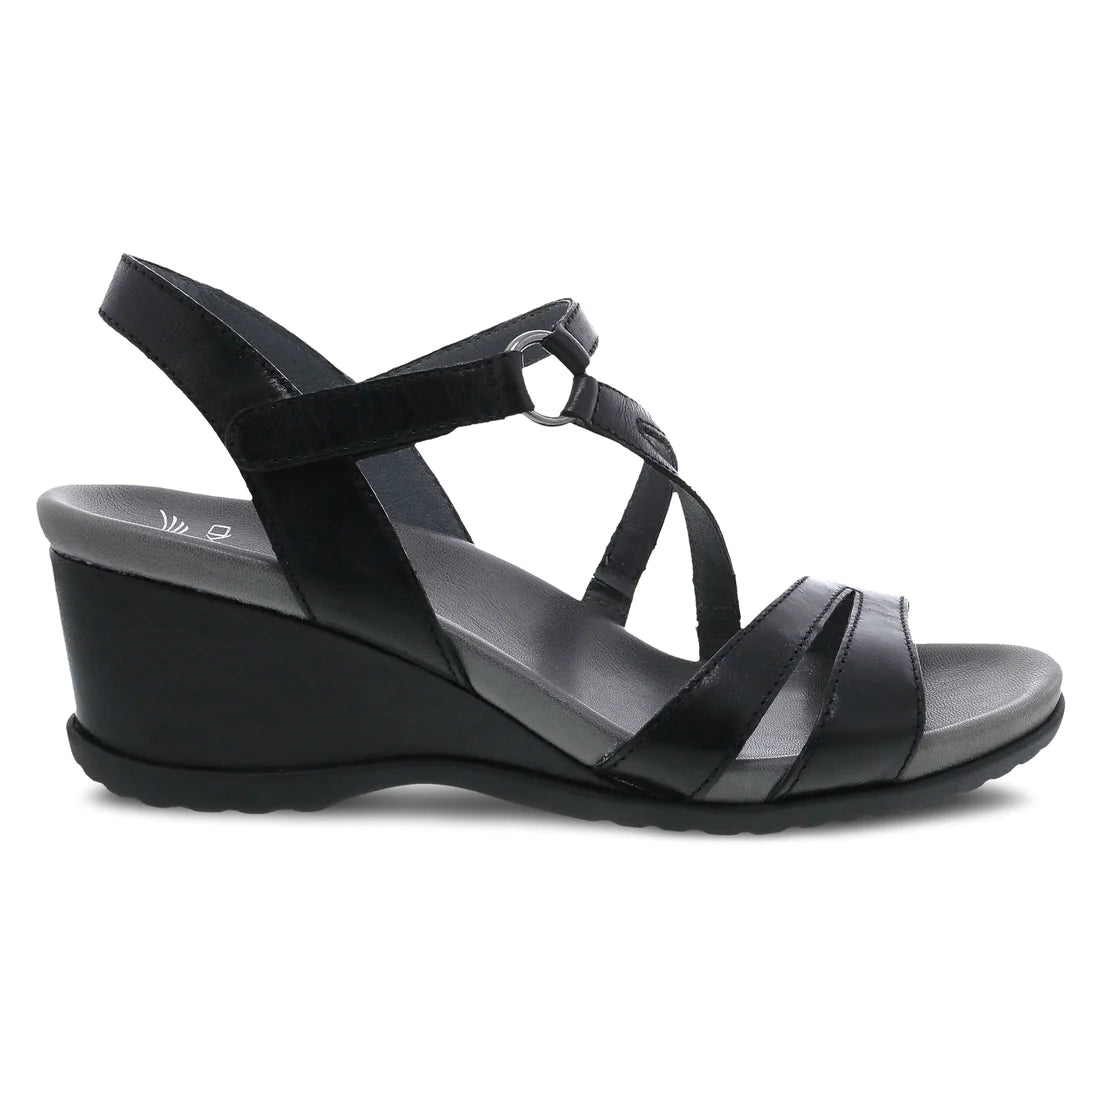 Dansko Women's Addyson Wedge Sandal - Black Glazed